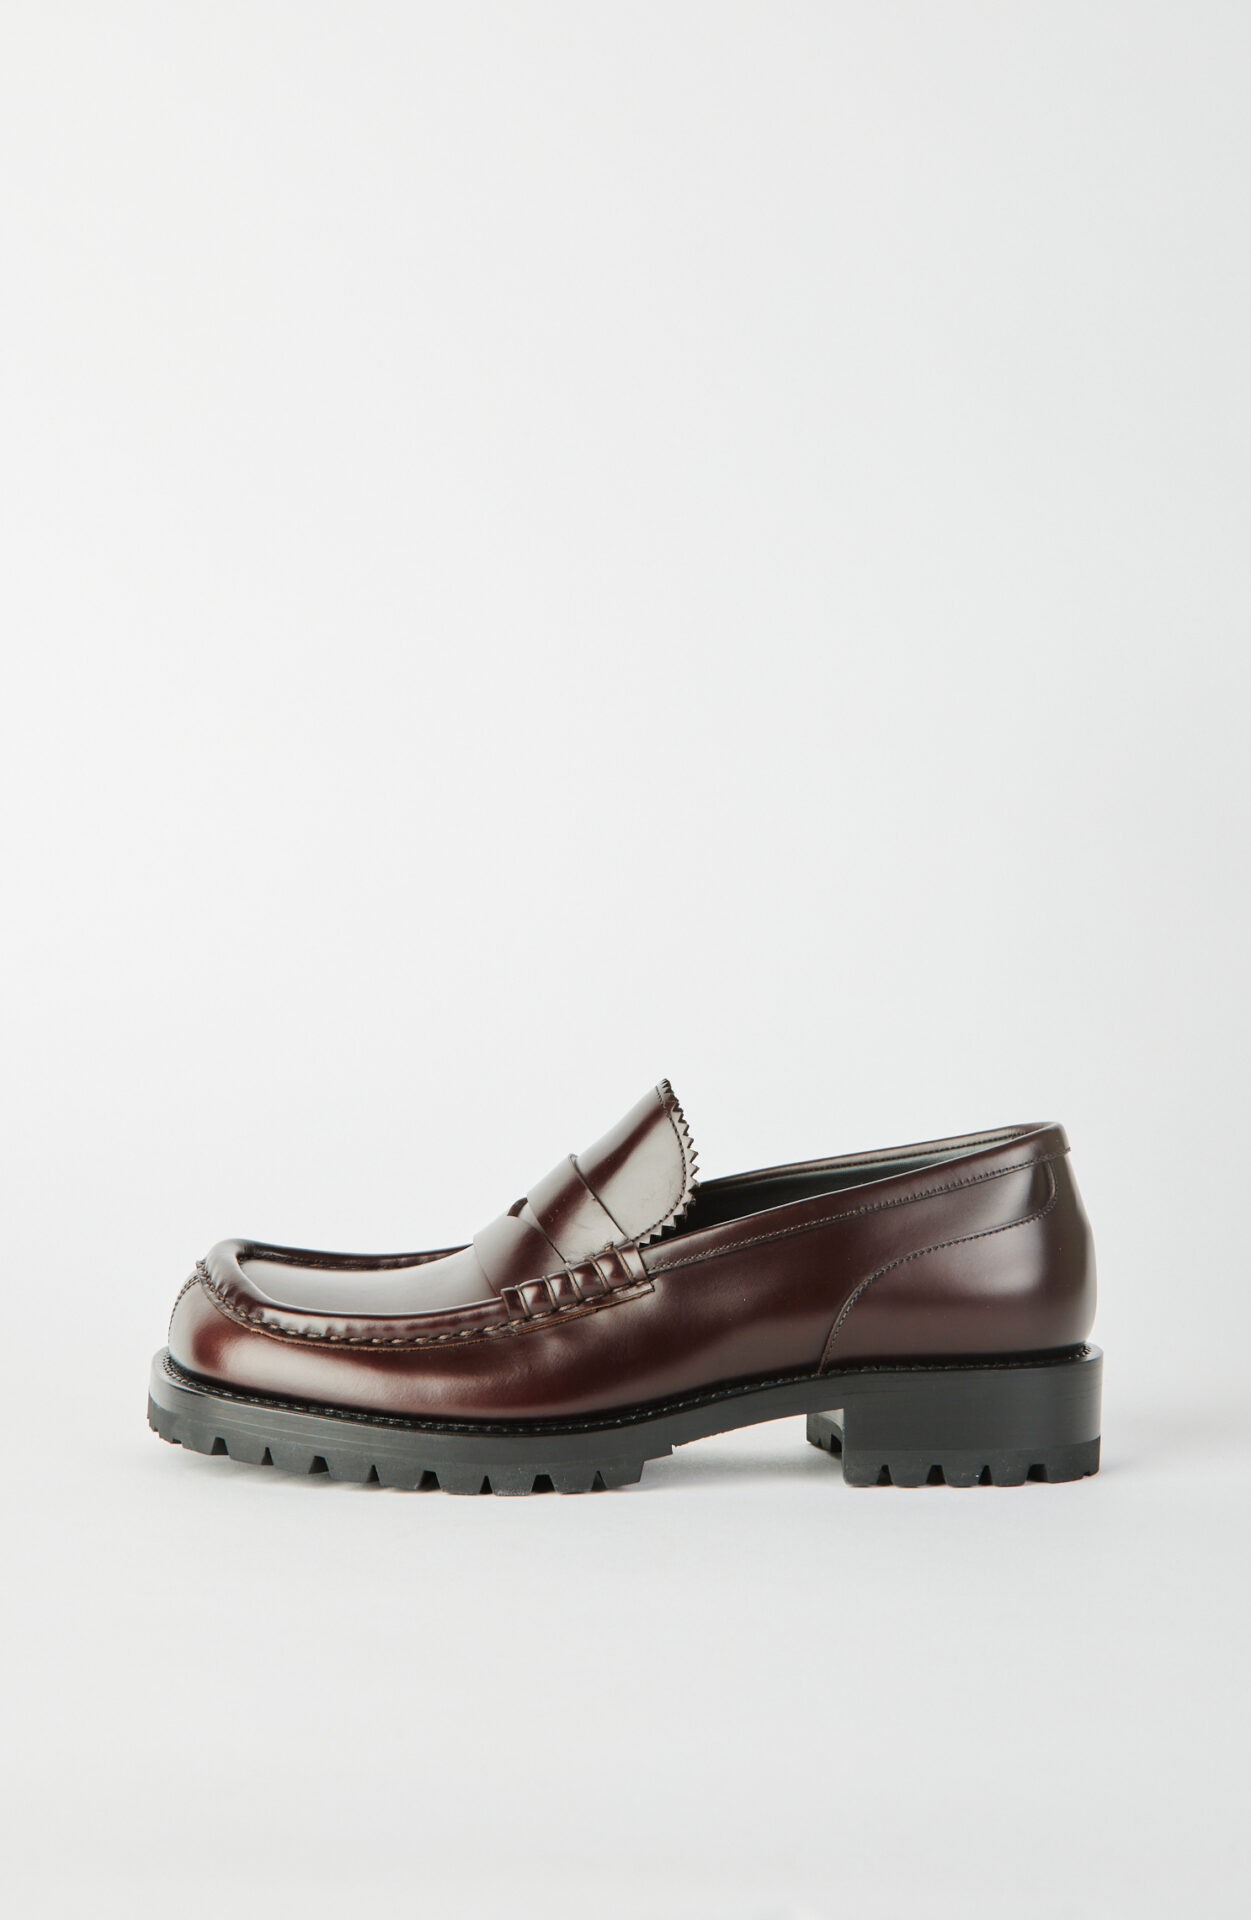 Dries van Noten - Brown leather loafers - Schwittenberg